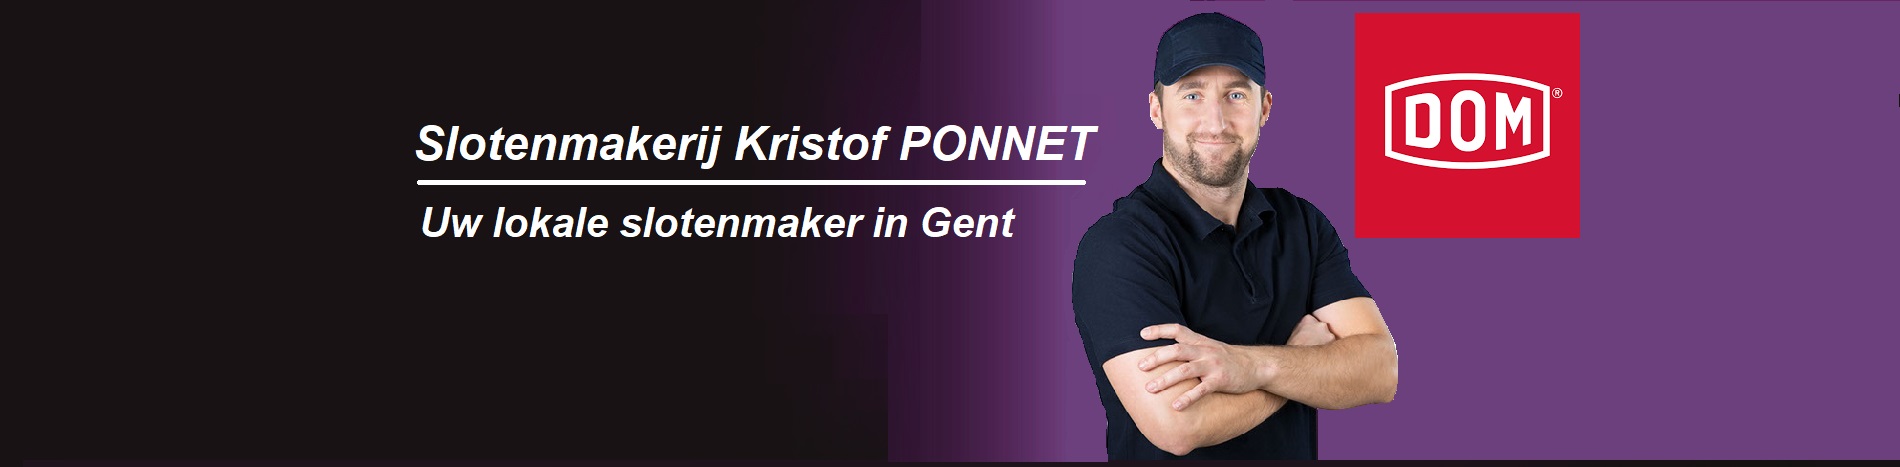 Gent Slotenmaker Kristof Ponnet